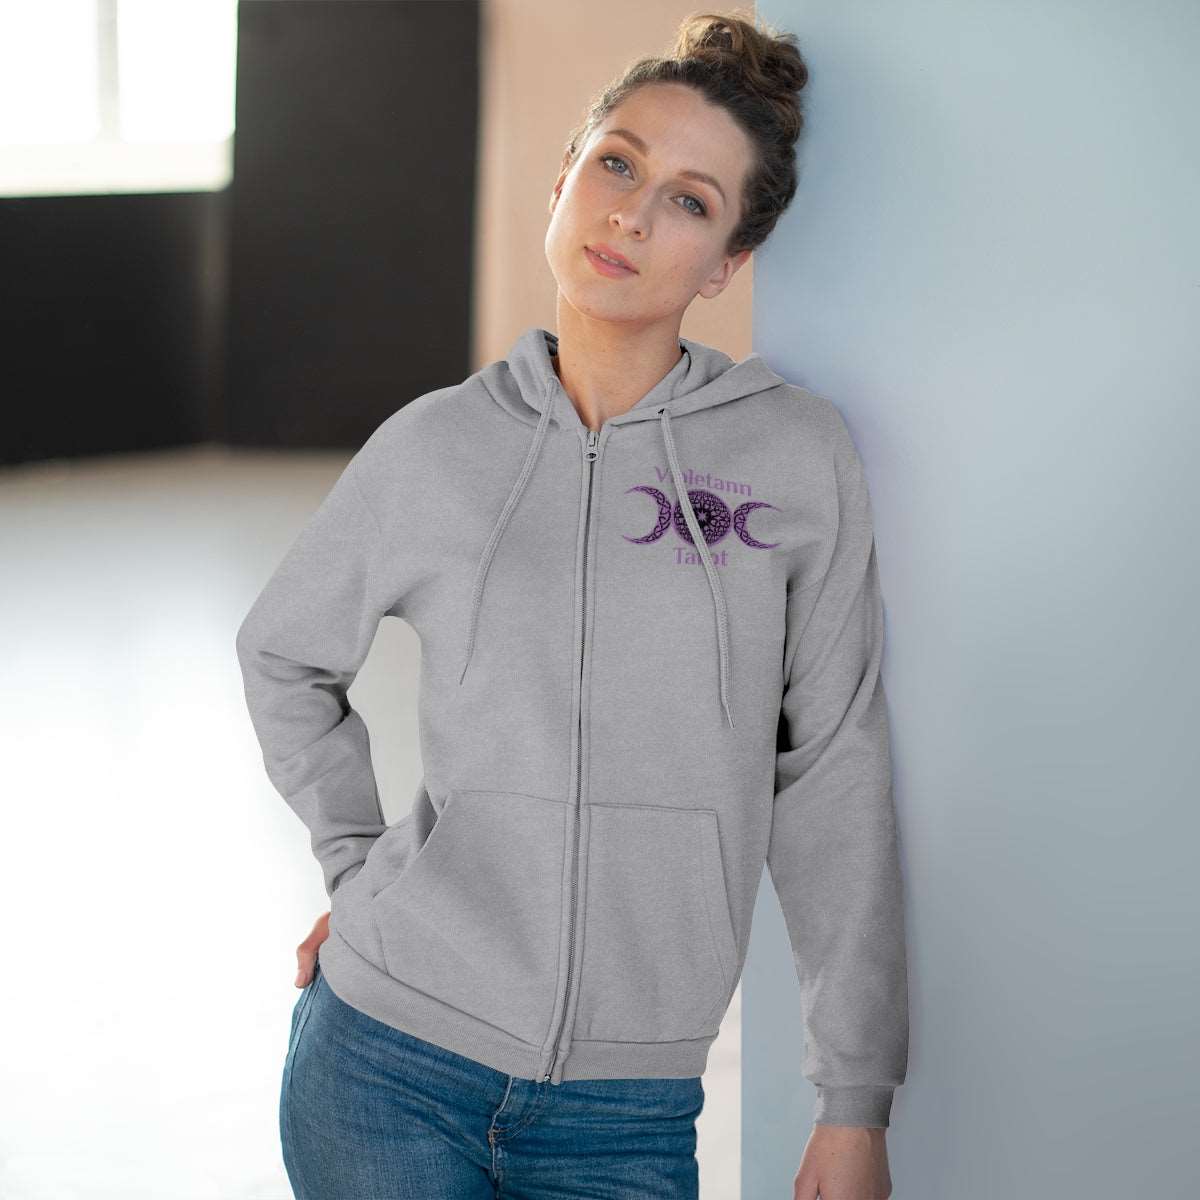 Violetann Tarot Logo - Unisex Hooded Zip Sweatshirt